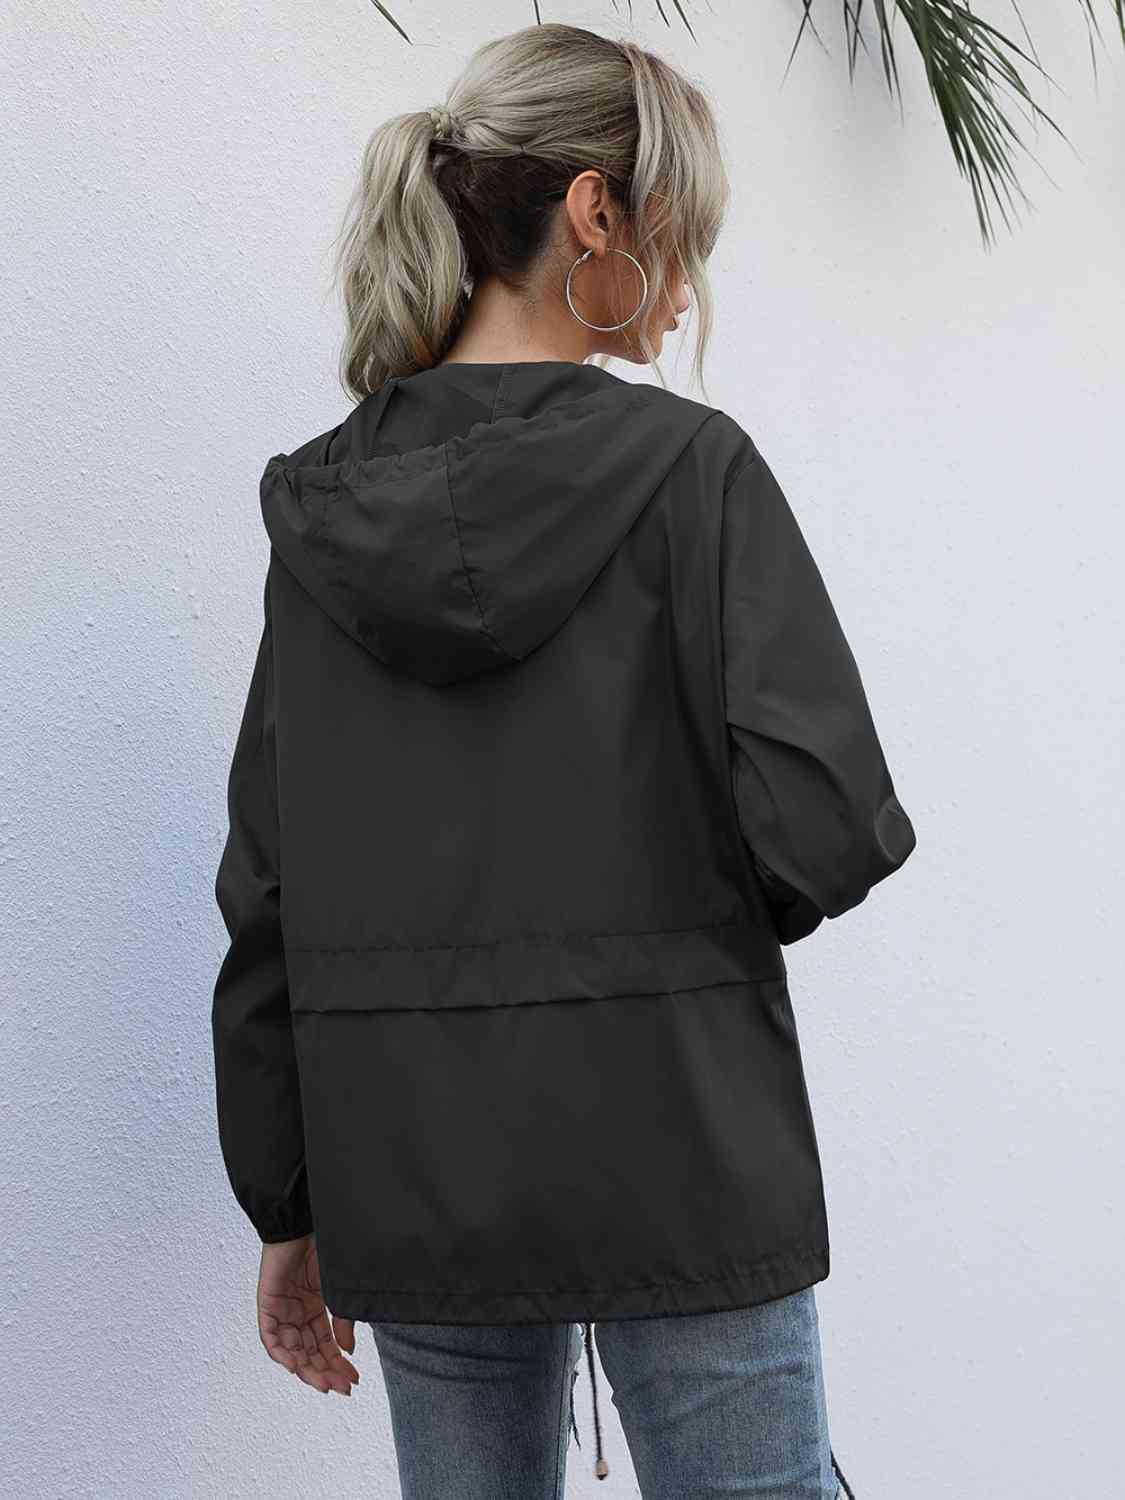 Drawstring Zip-Up Hooded Jacket - Fashion Girl Online Store